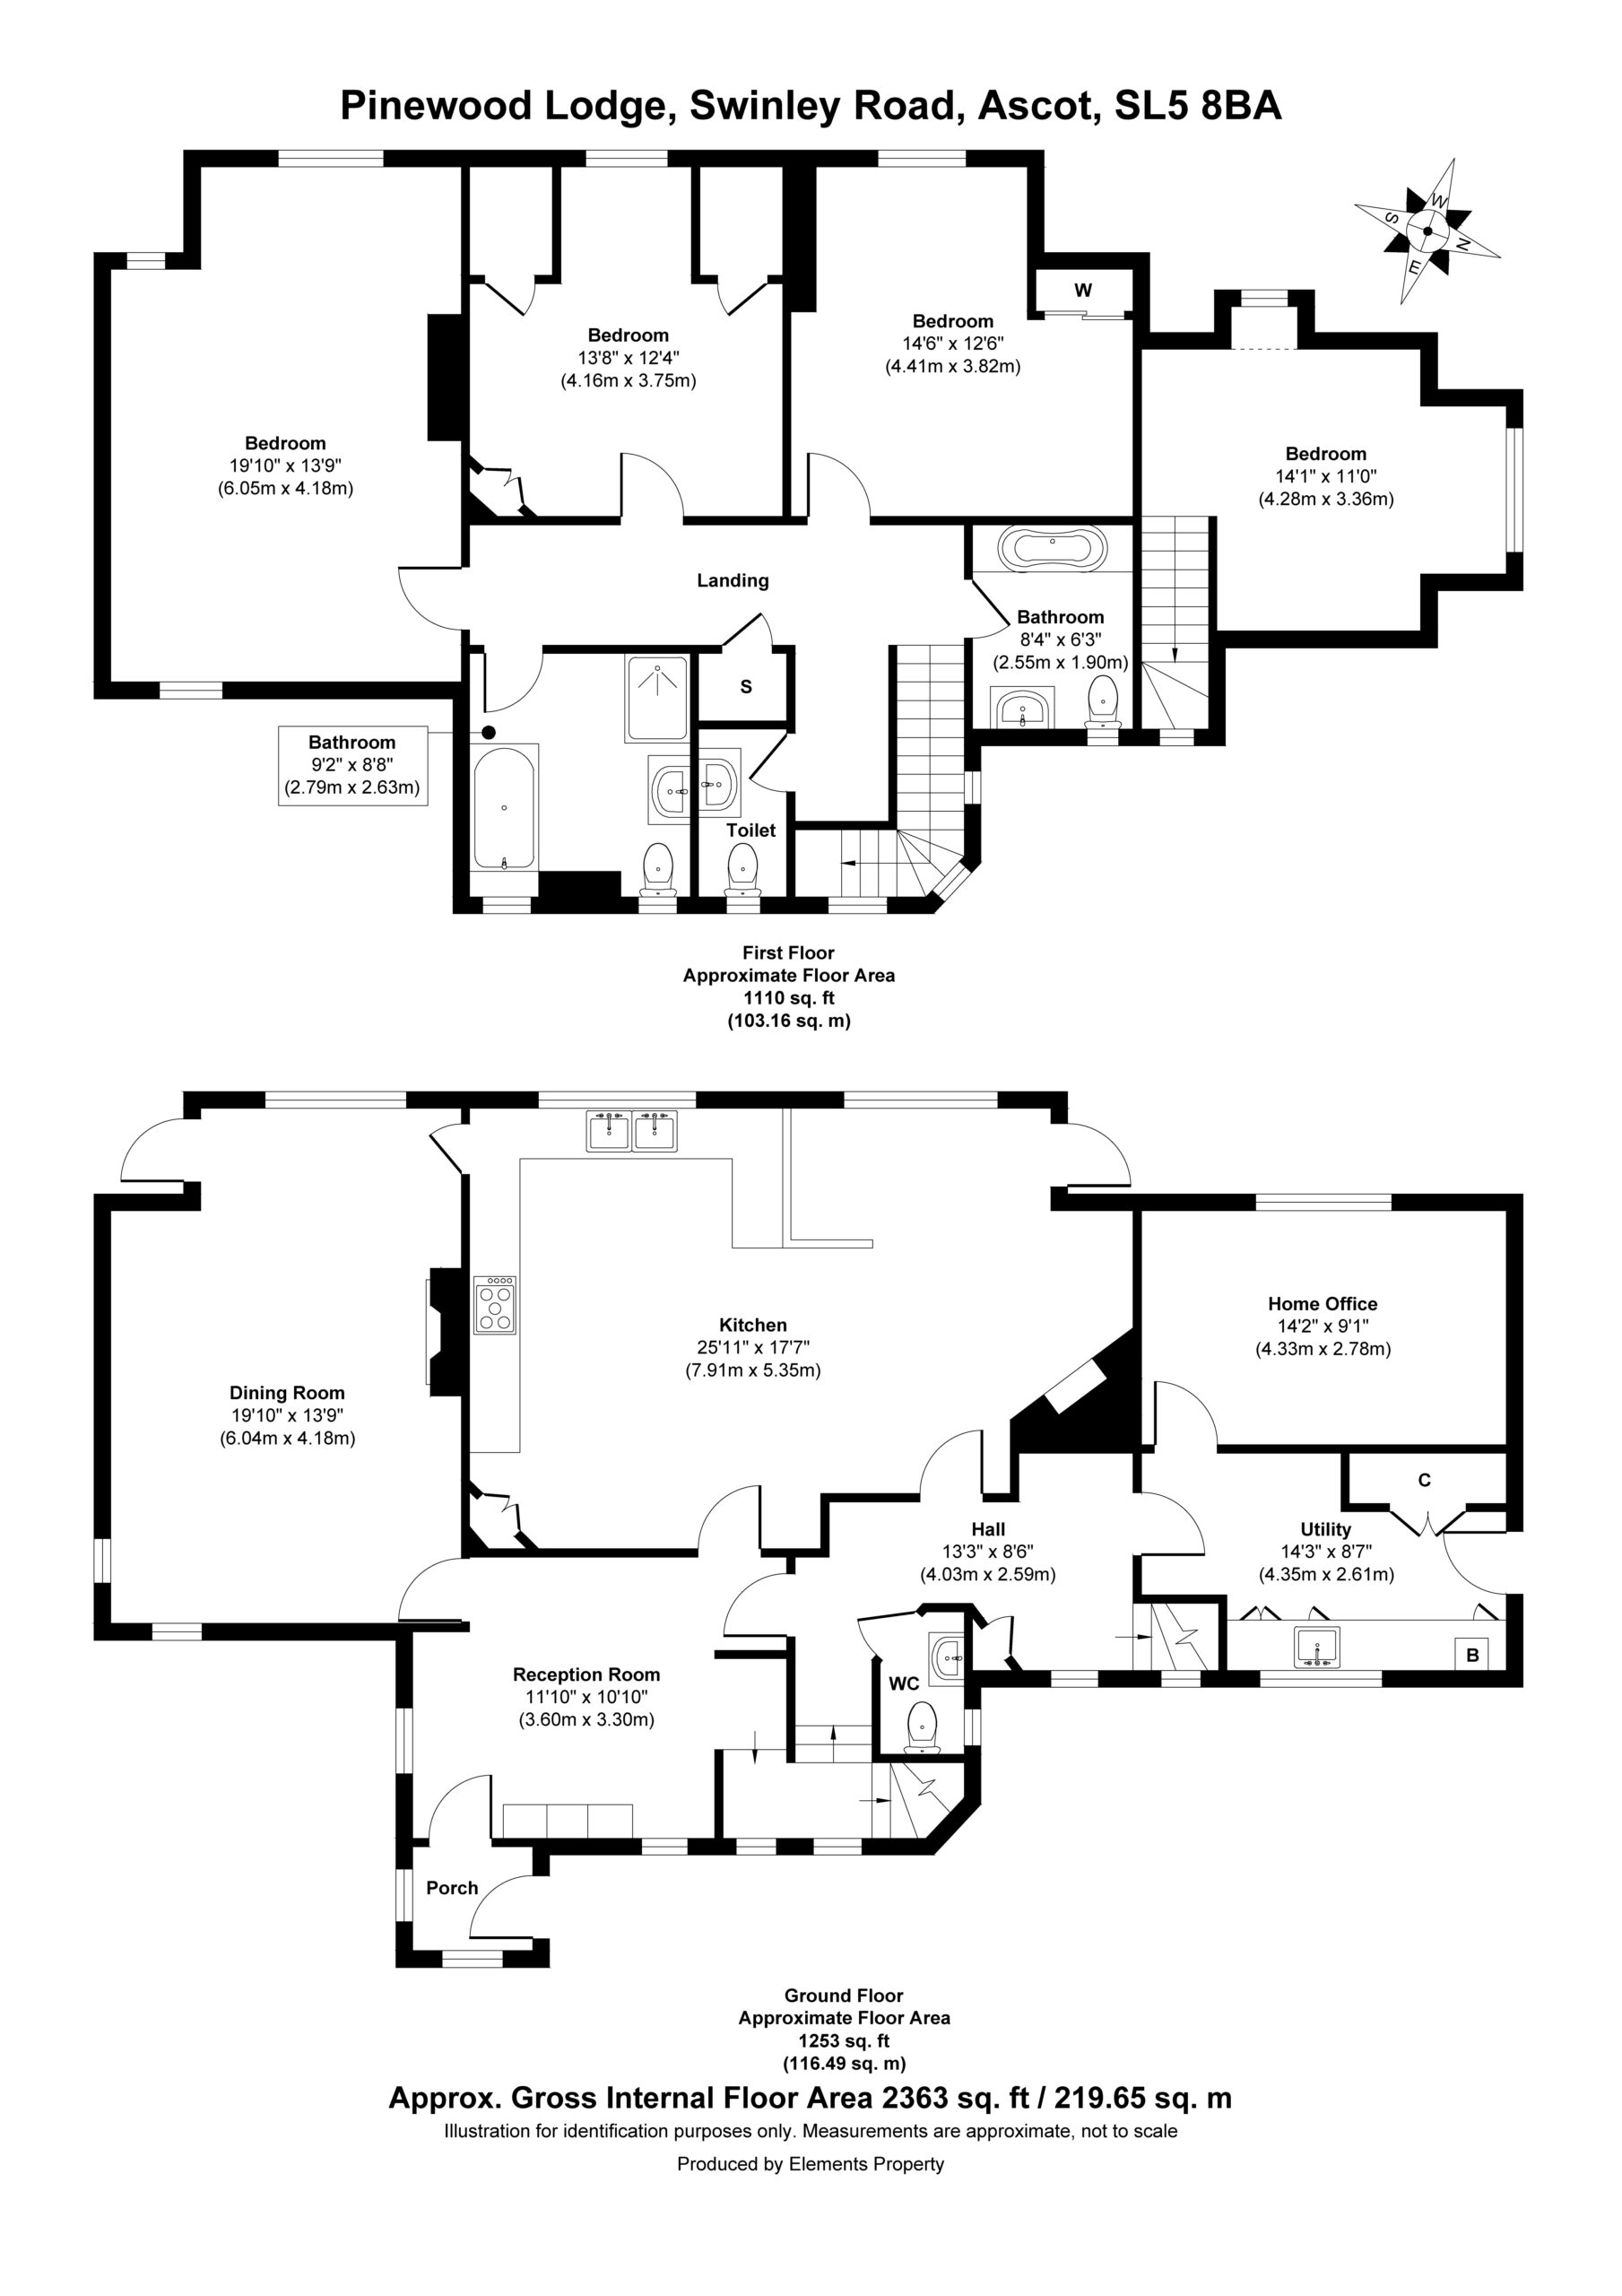 Floor plan for Pinewood Lodge, Swinley Road, Ascot, SL5 8BA